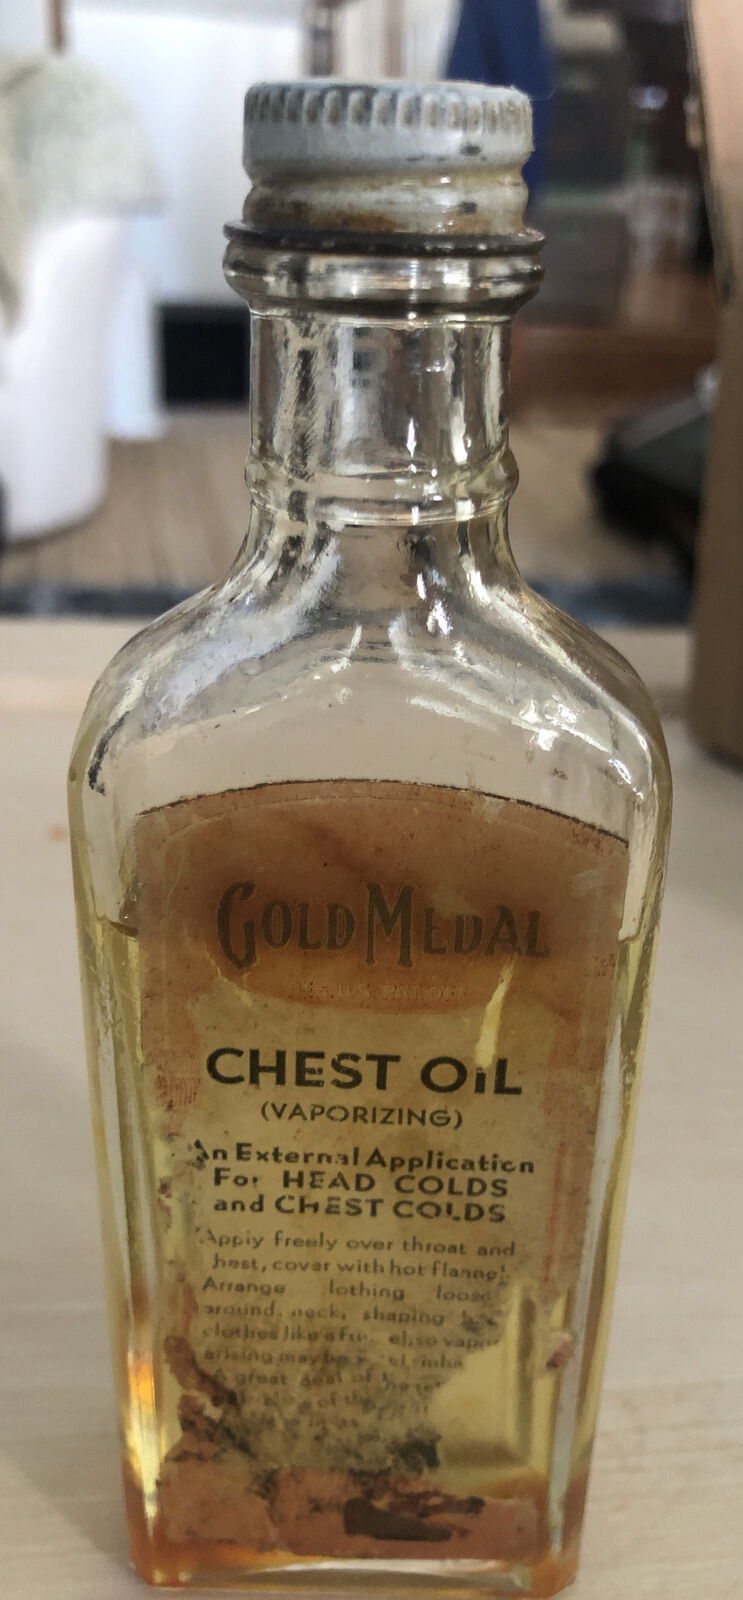 Rare Vintage Gold Medal Chest Oil Bottle